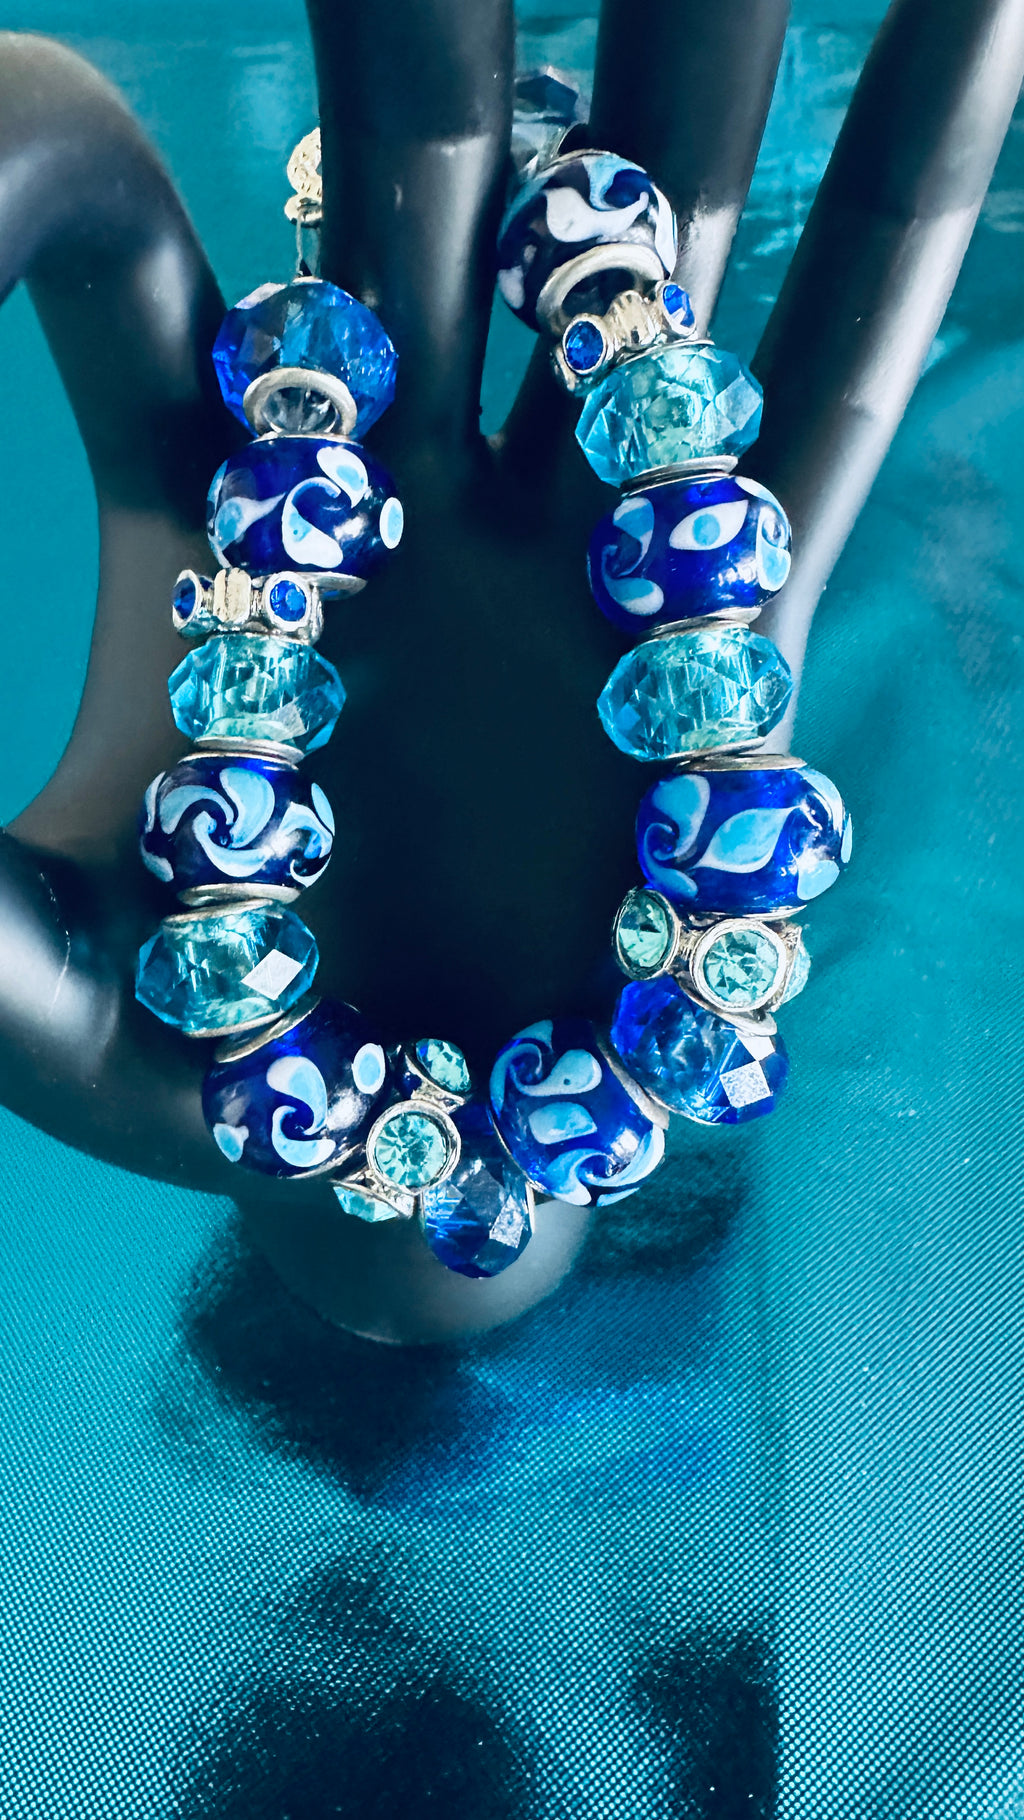 Stunning Multi-Colored Turquoise Glass Beaded Bracelet, Beaded Earrings & Matching Ring